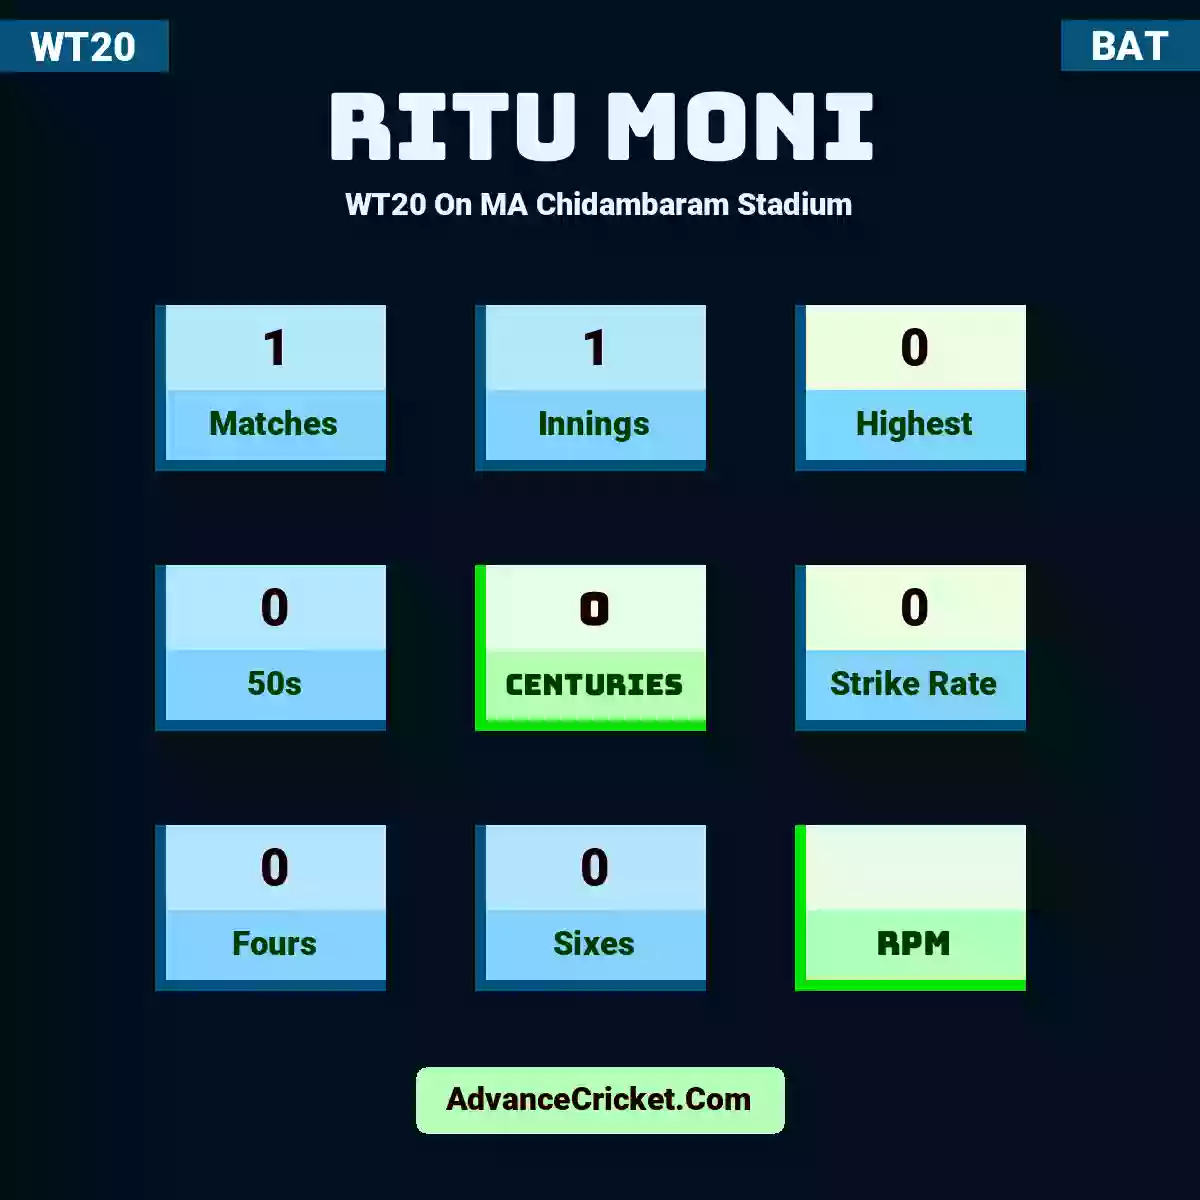 Ritu Moni WT20  On MA Chidambaram Stadium, Ritu Moni played 1 matches, scored 0 runs as highest, 0 half-centuries, and 0 centuries, with a strike rate of 0. R.Moni hit 0 fours and 0 sixes.